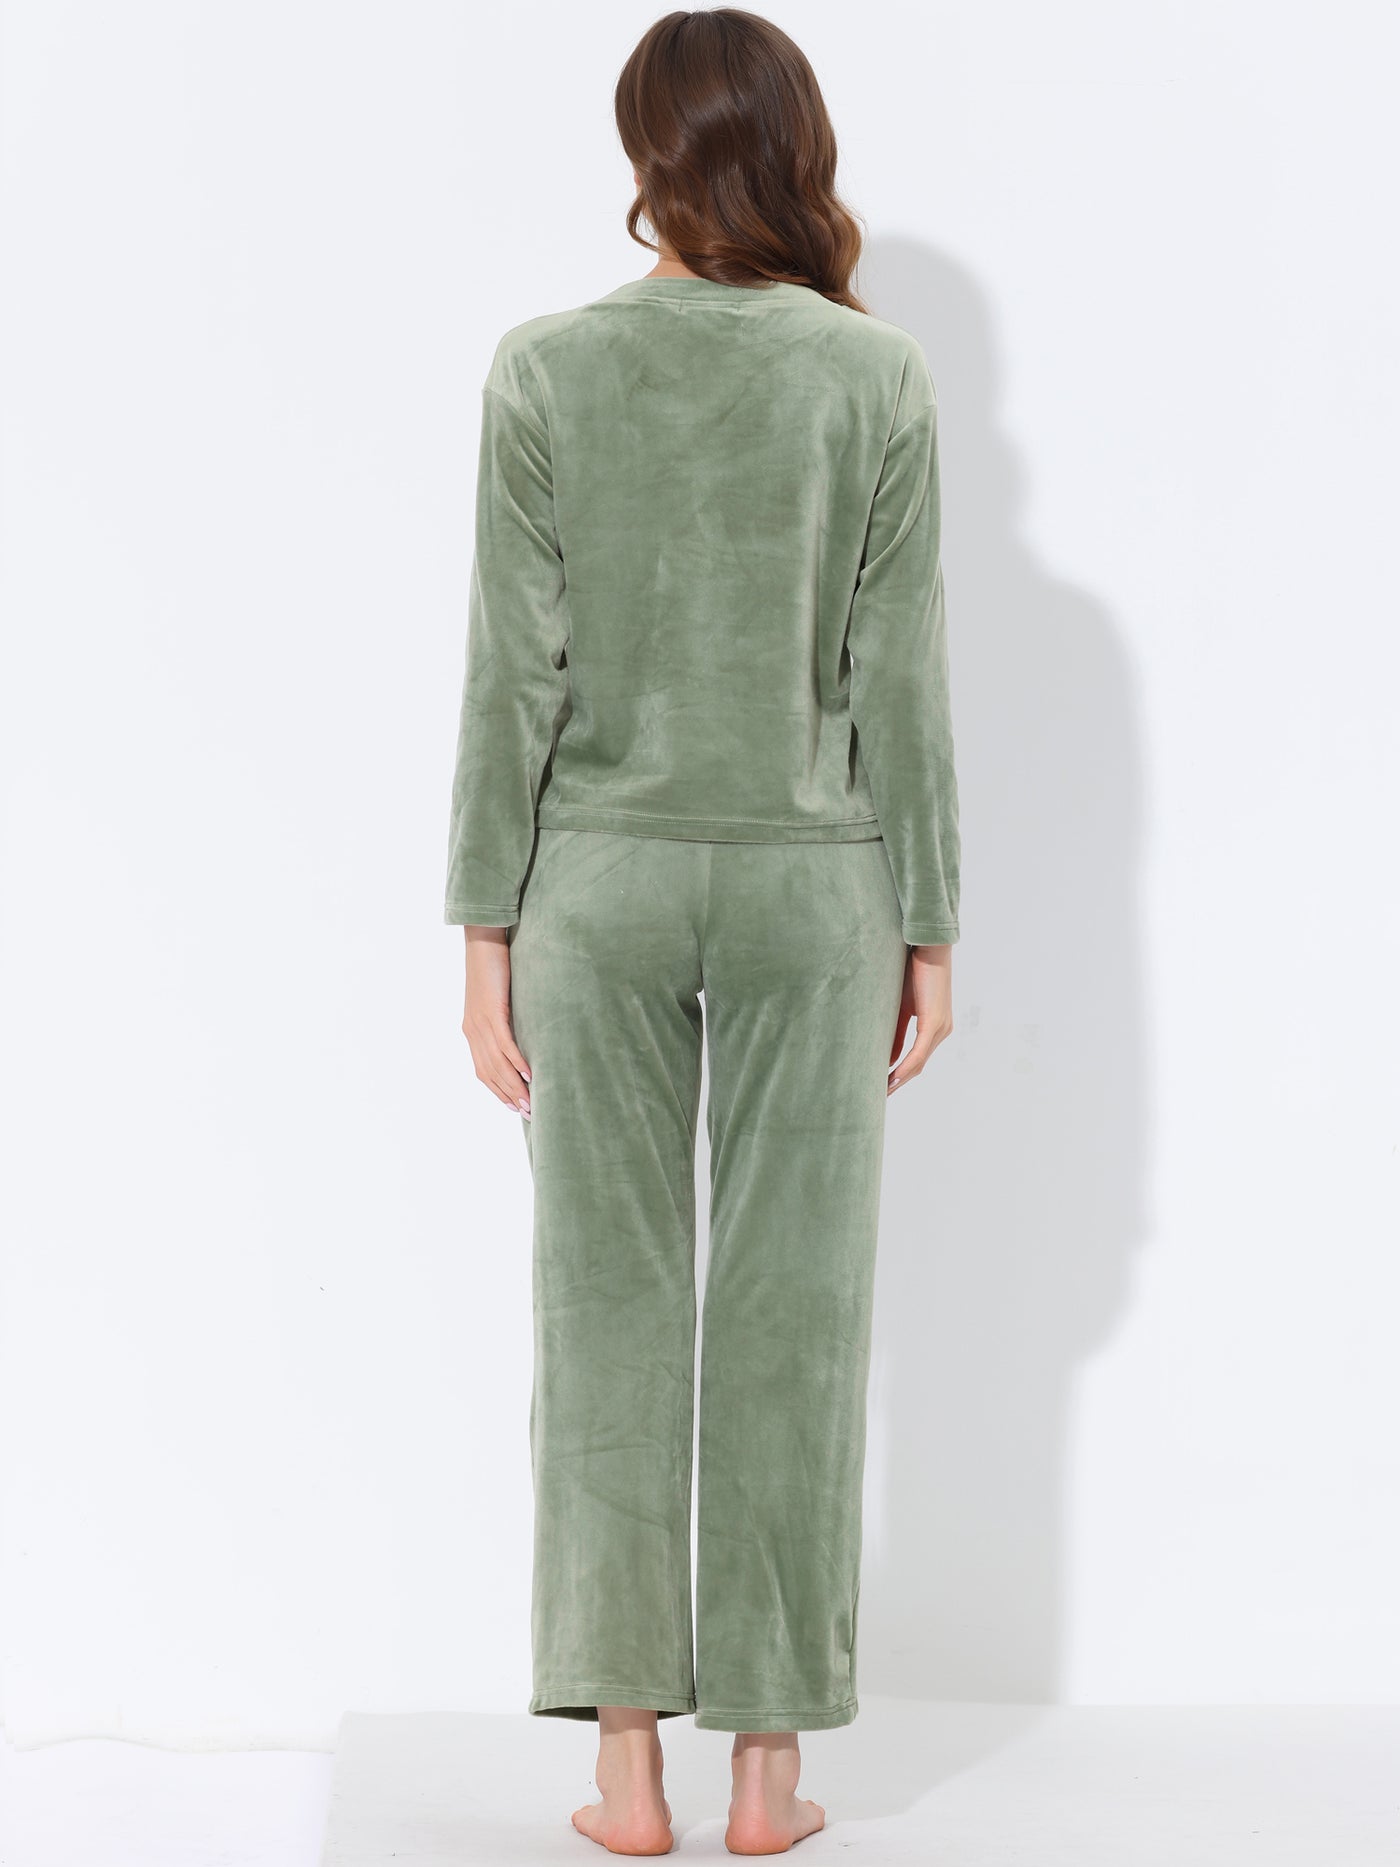 Bublédon Women's Sleepwear Velvet Nightwear with Pockets Pajama Sets